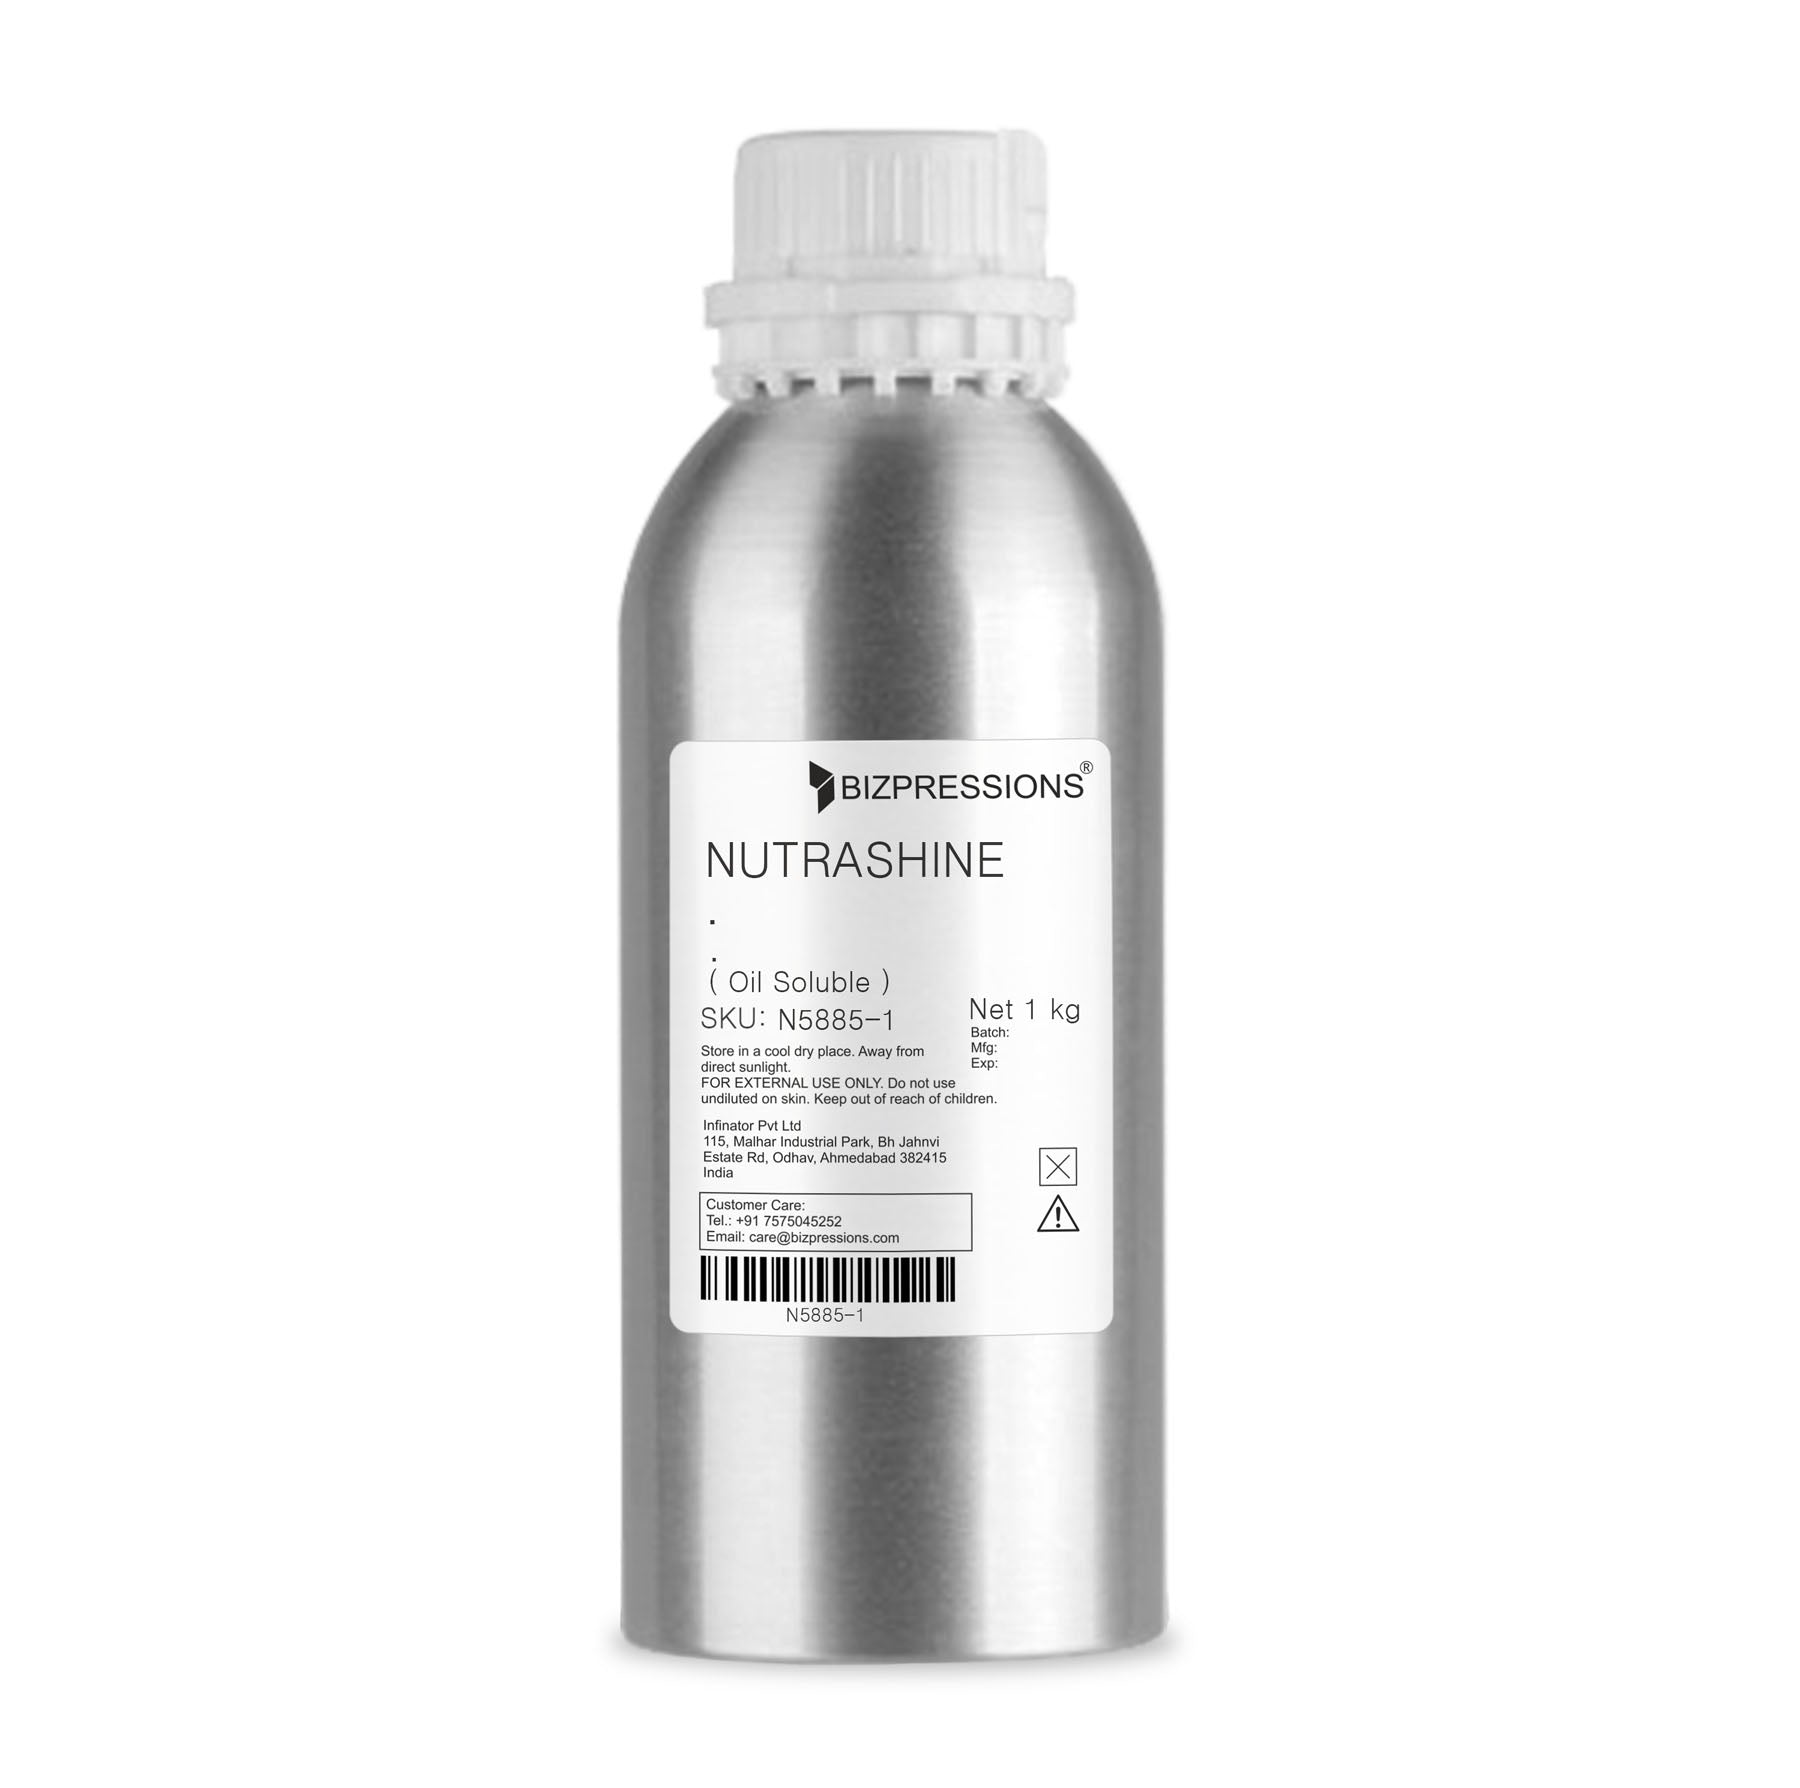 NUTRASHINE - Fragrance ( Oil Soluble ) - 1 kg